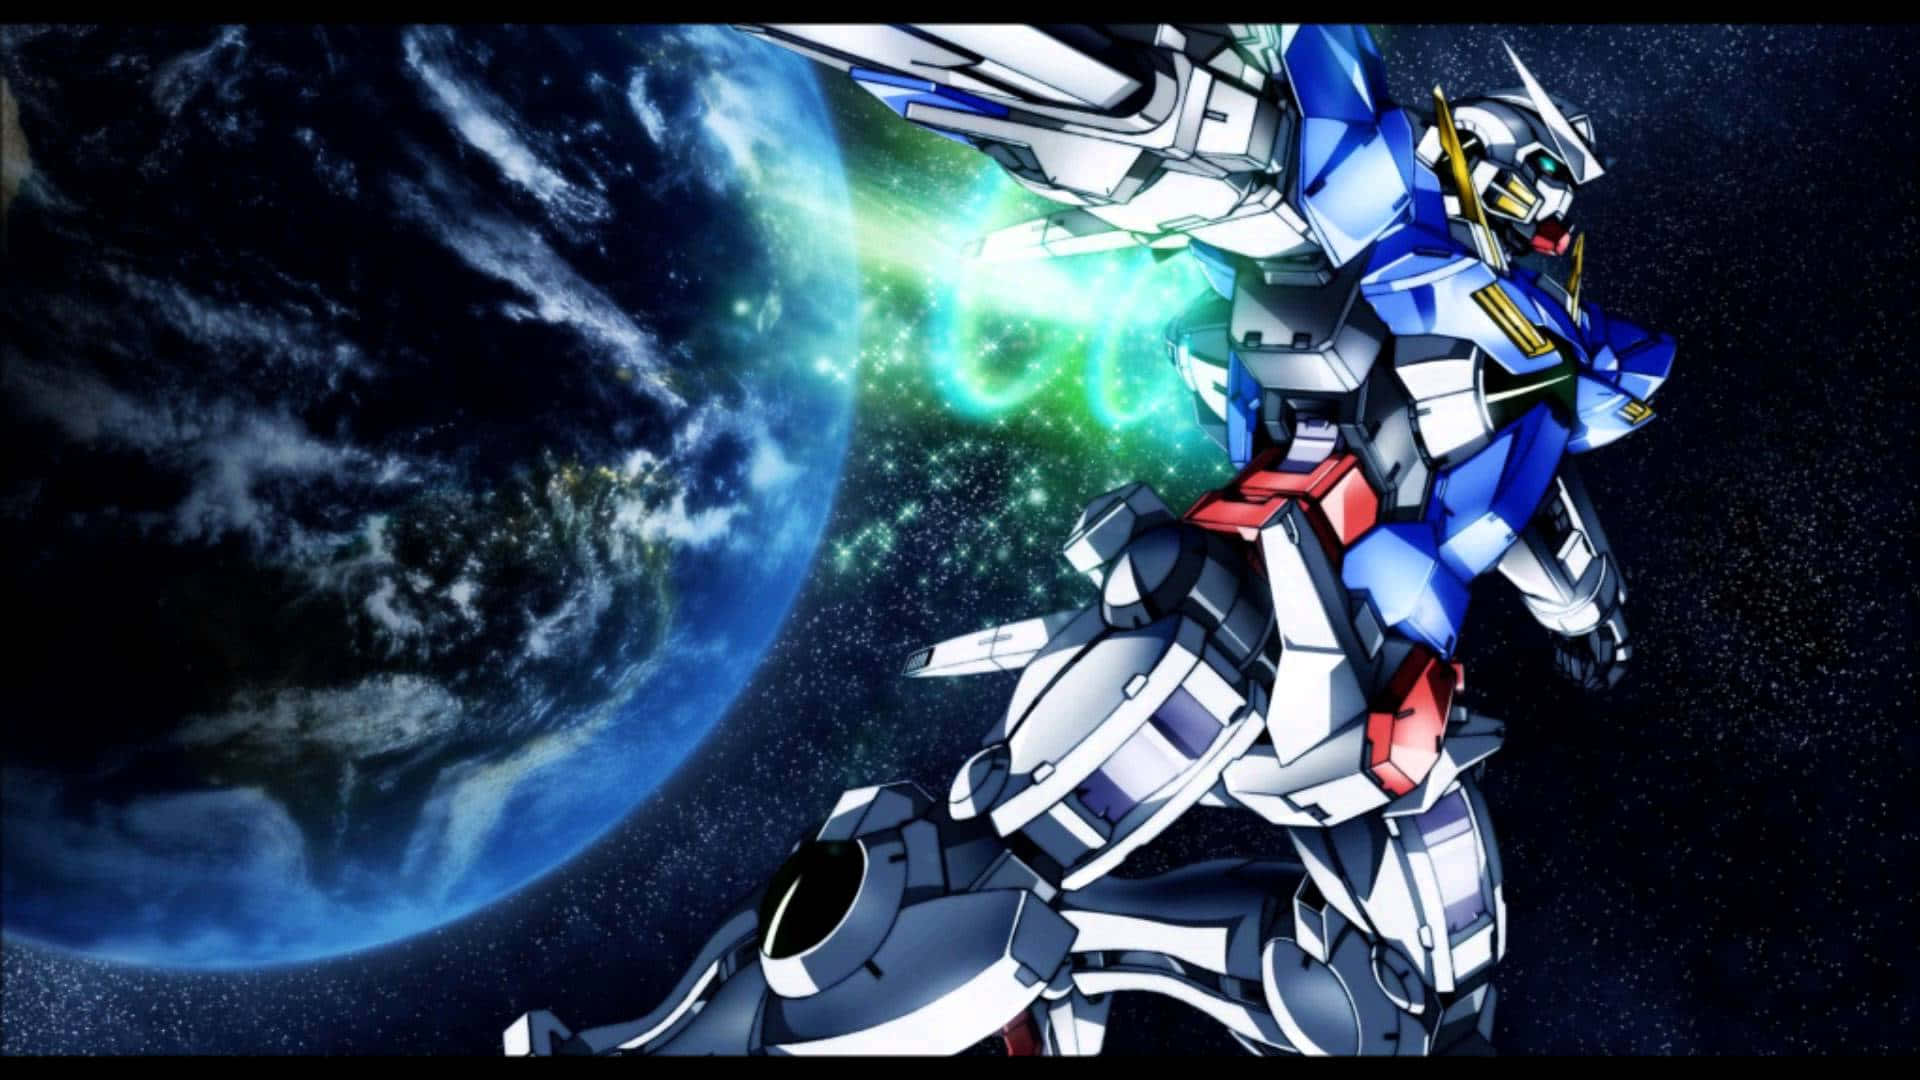 Blivklar Til At Erobre Universet Med Gundam's Magt.